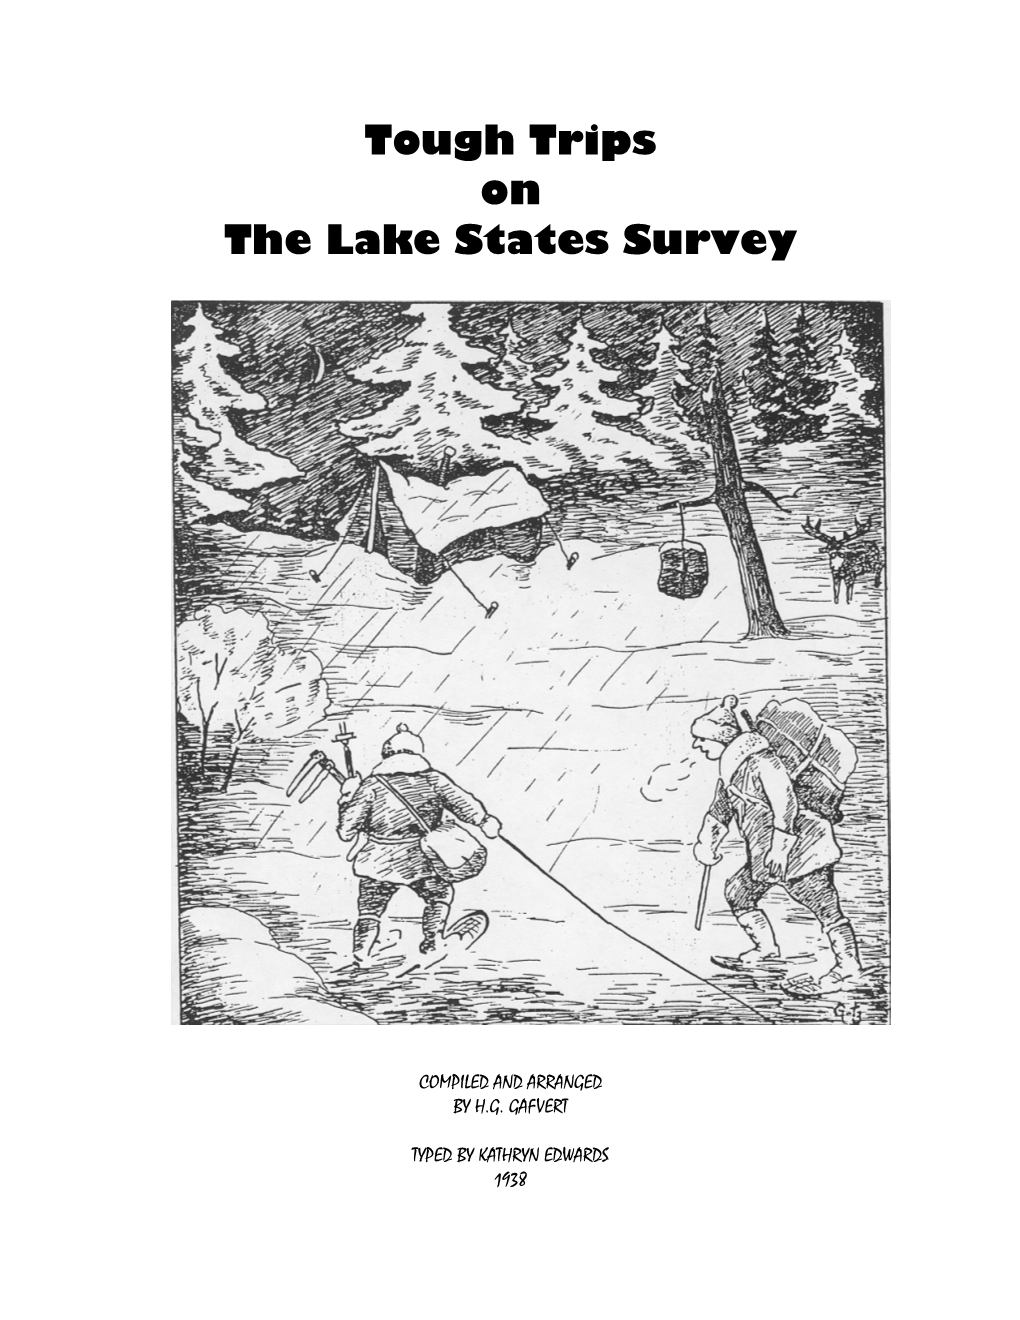 Tough Trips on the Lake States Survey